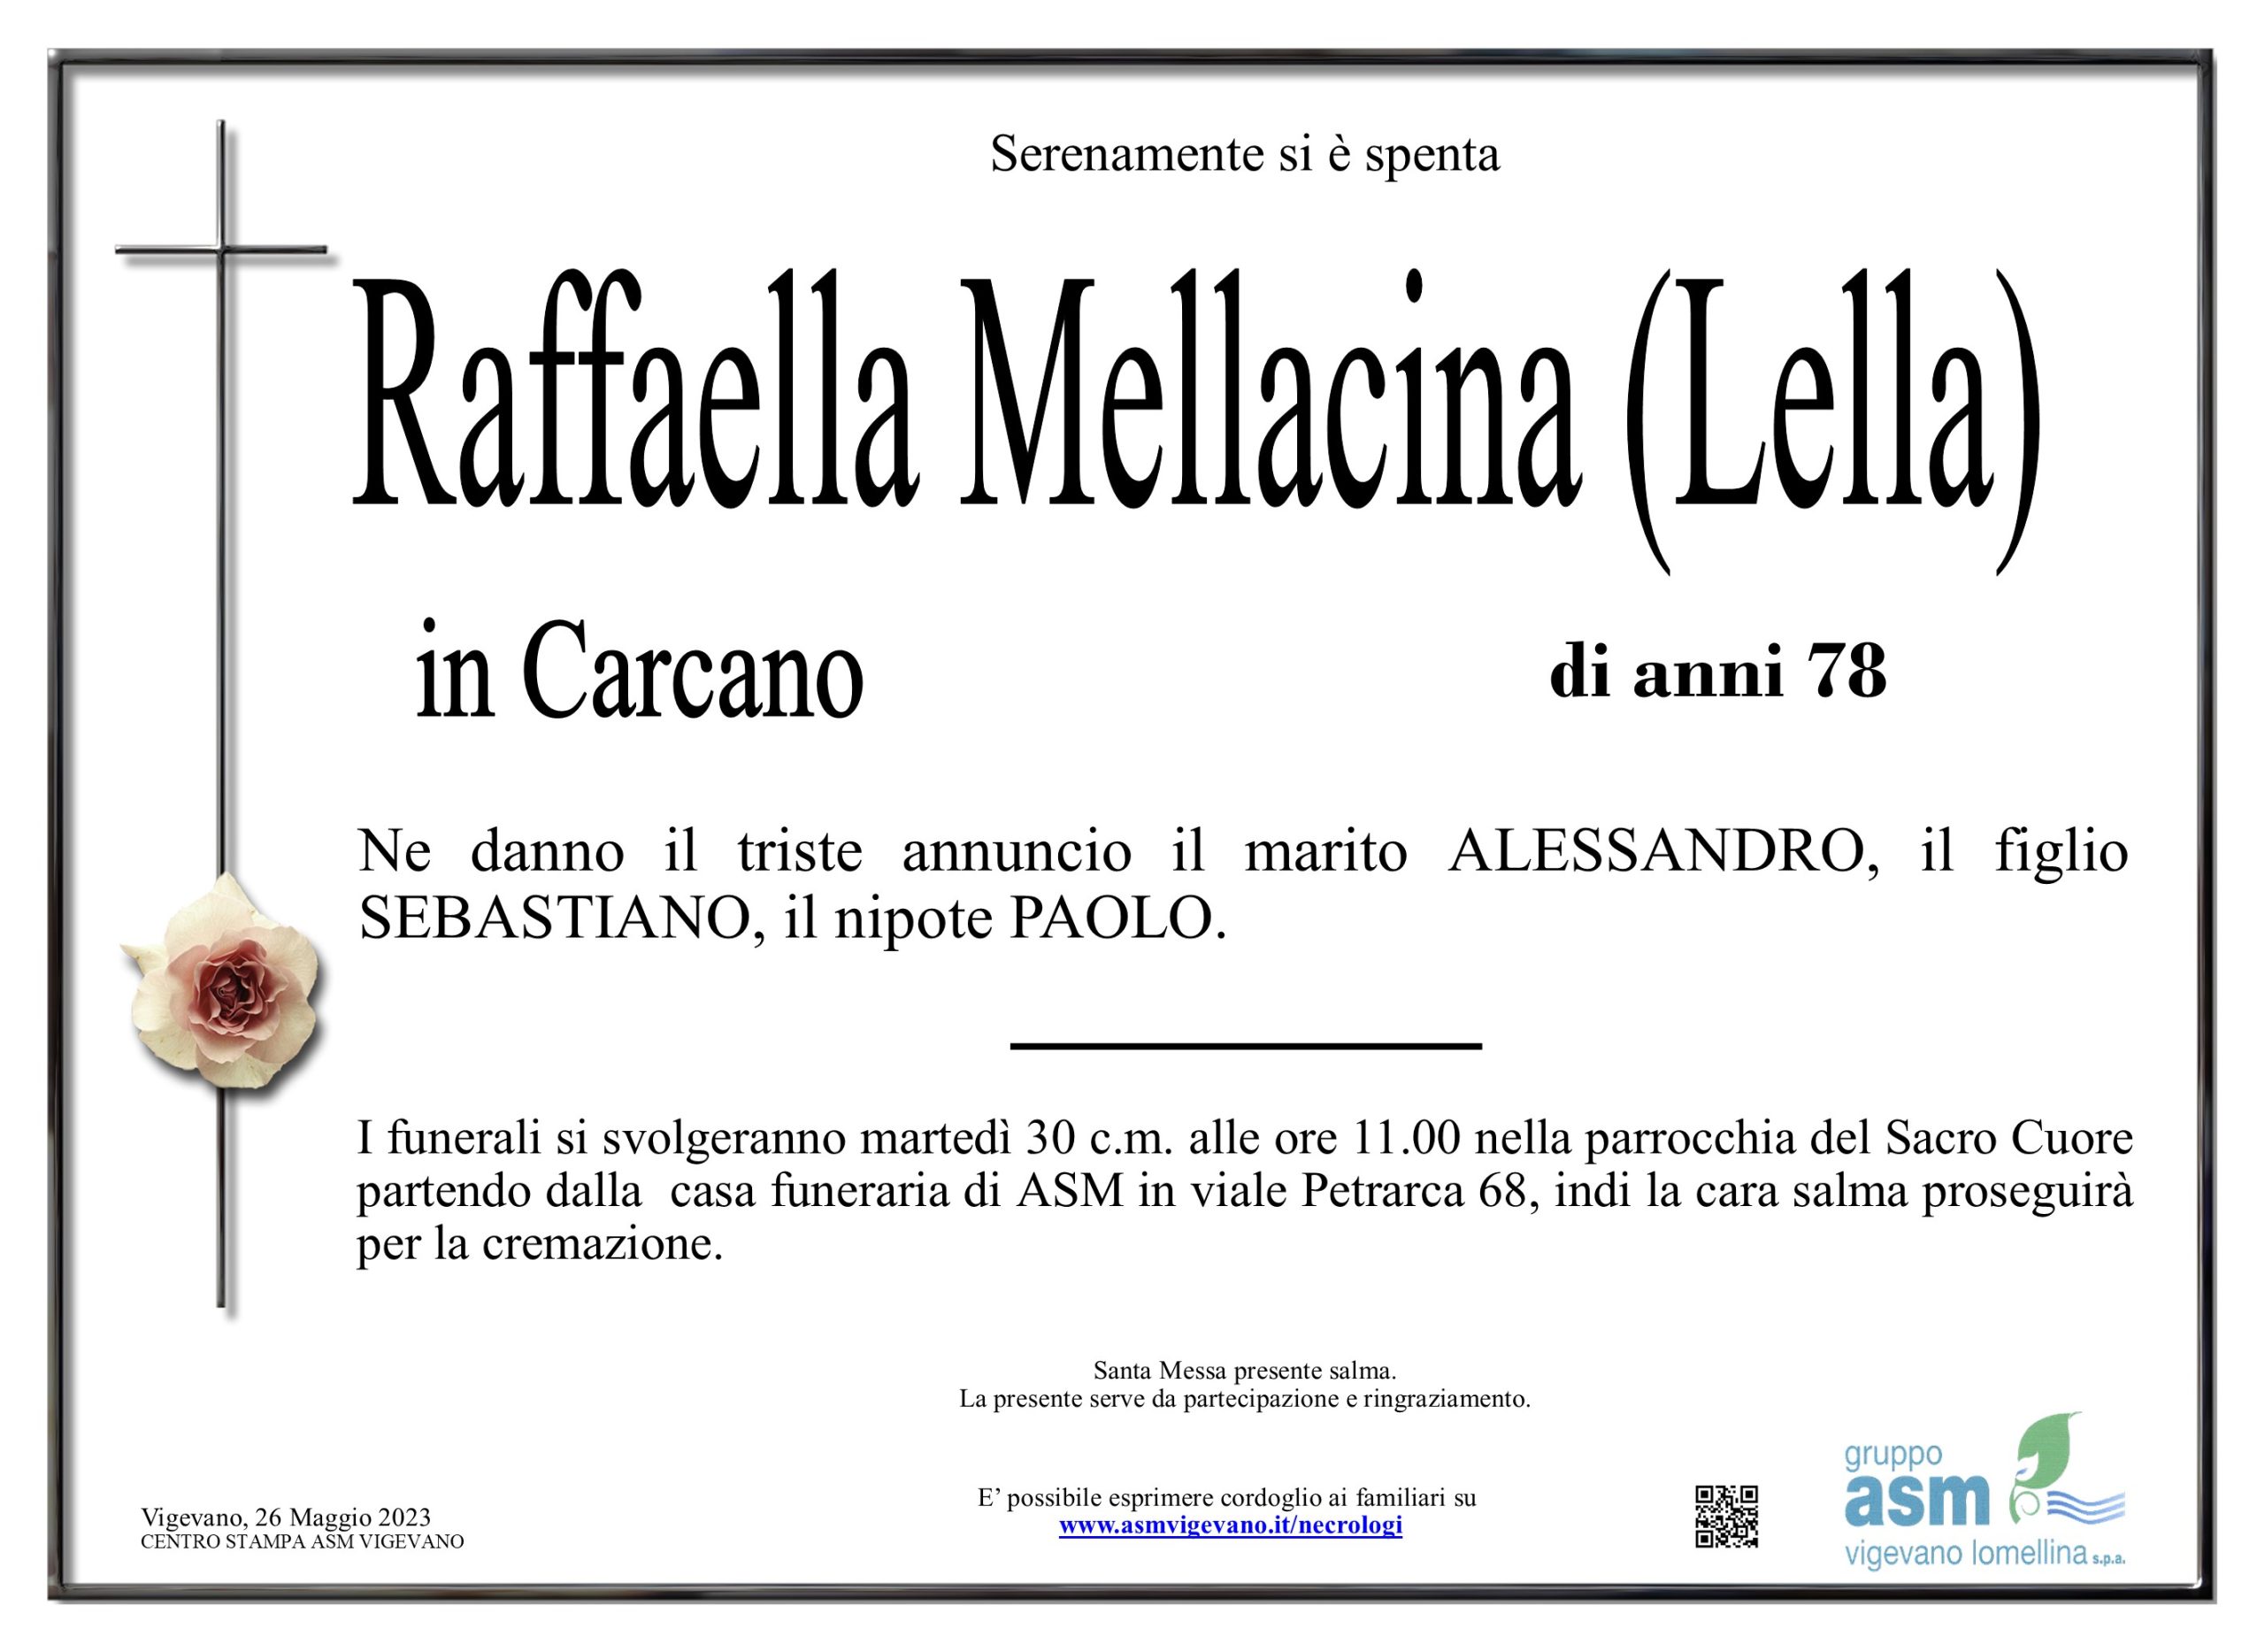 Raffaella Mellacina